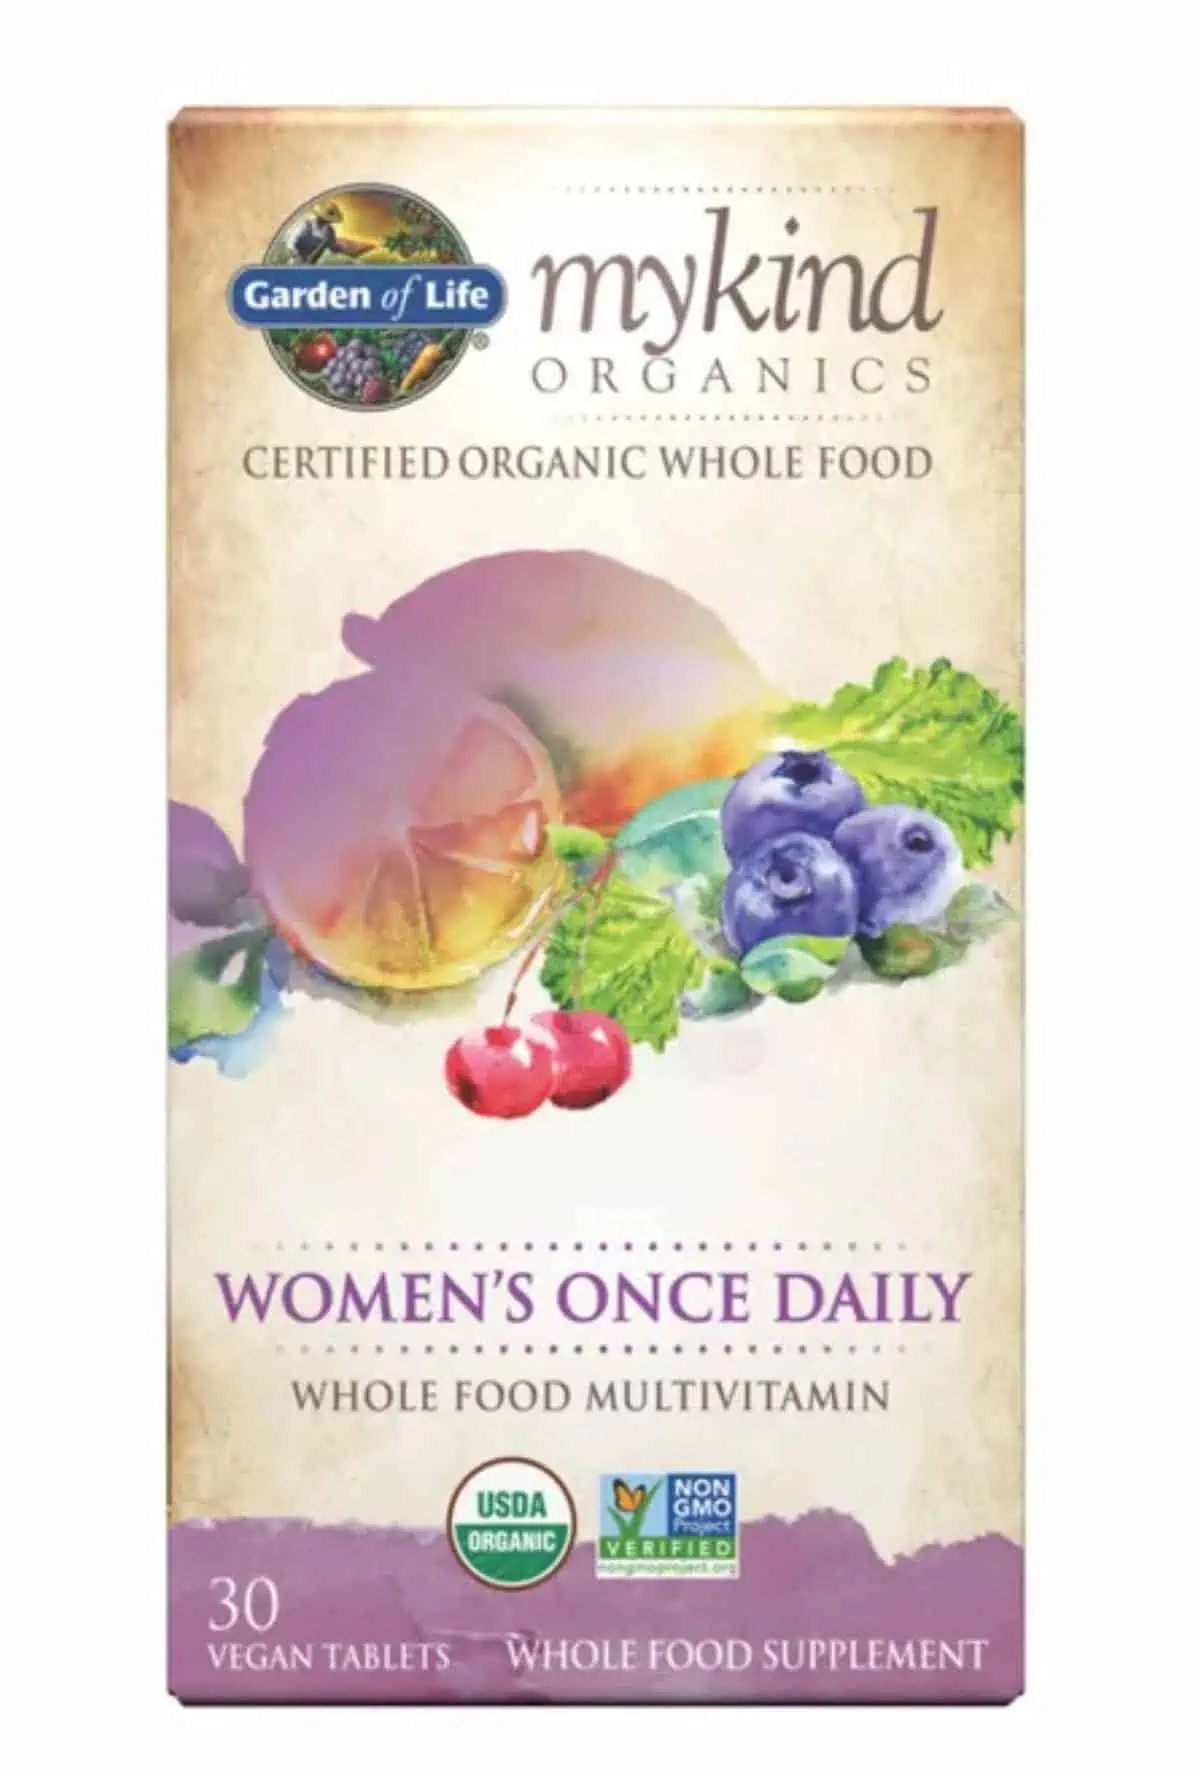 A package of Garden of Life Brand mykind vegan multivitamins.